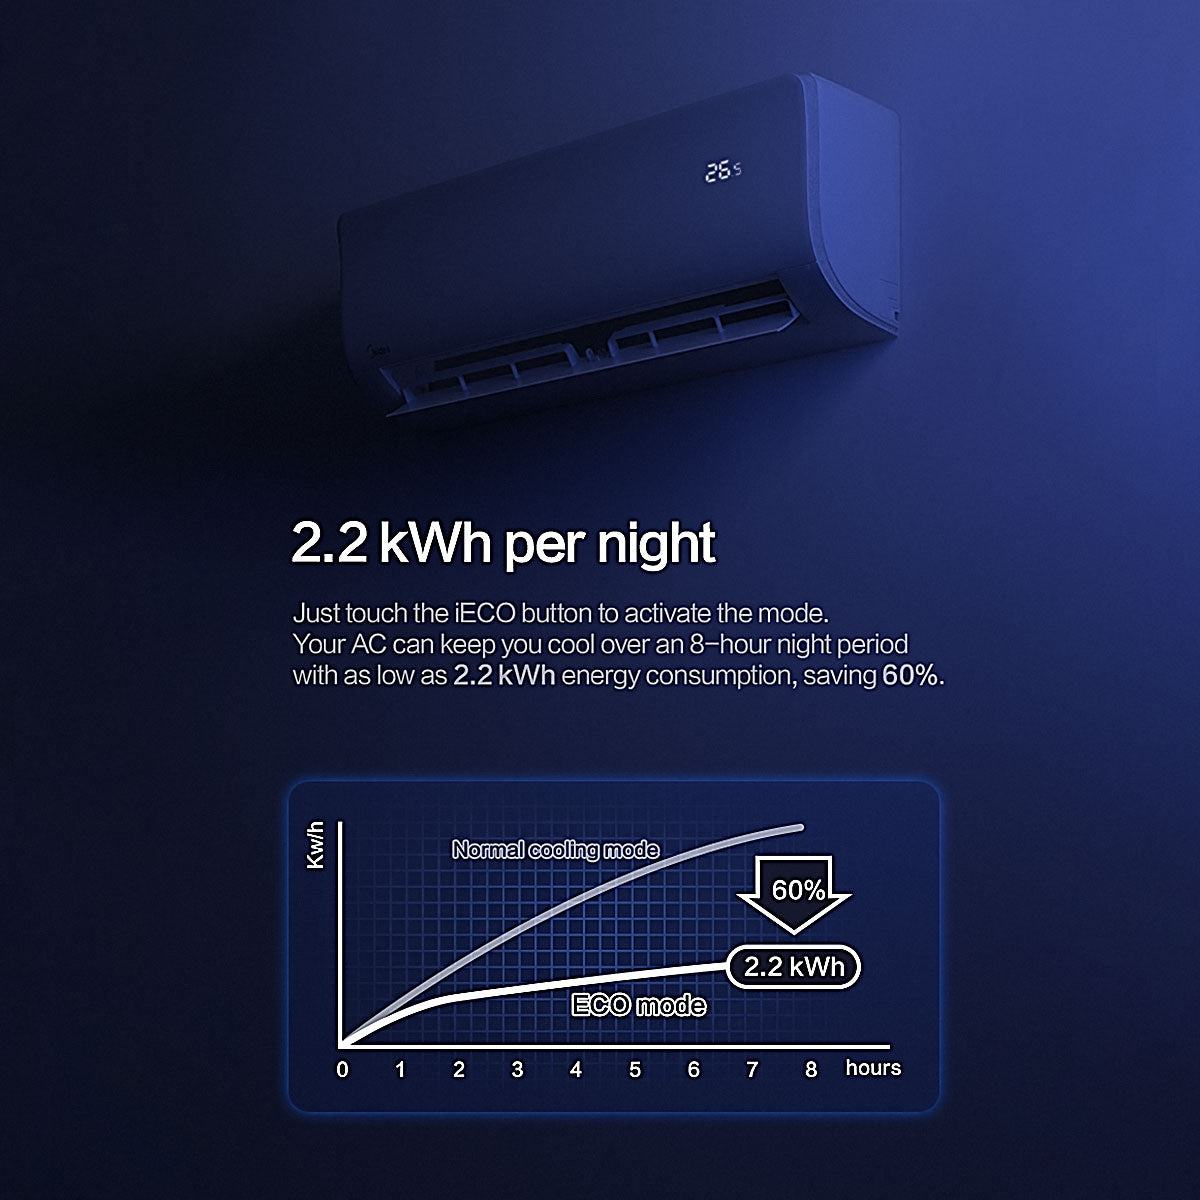 Midea Xtreme Save Split Air Conditioner 2.0 kW